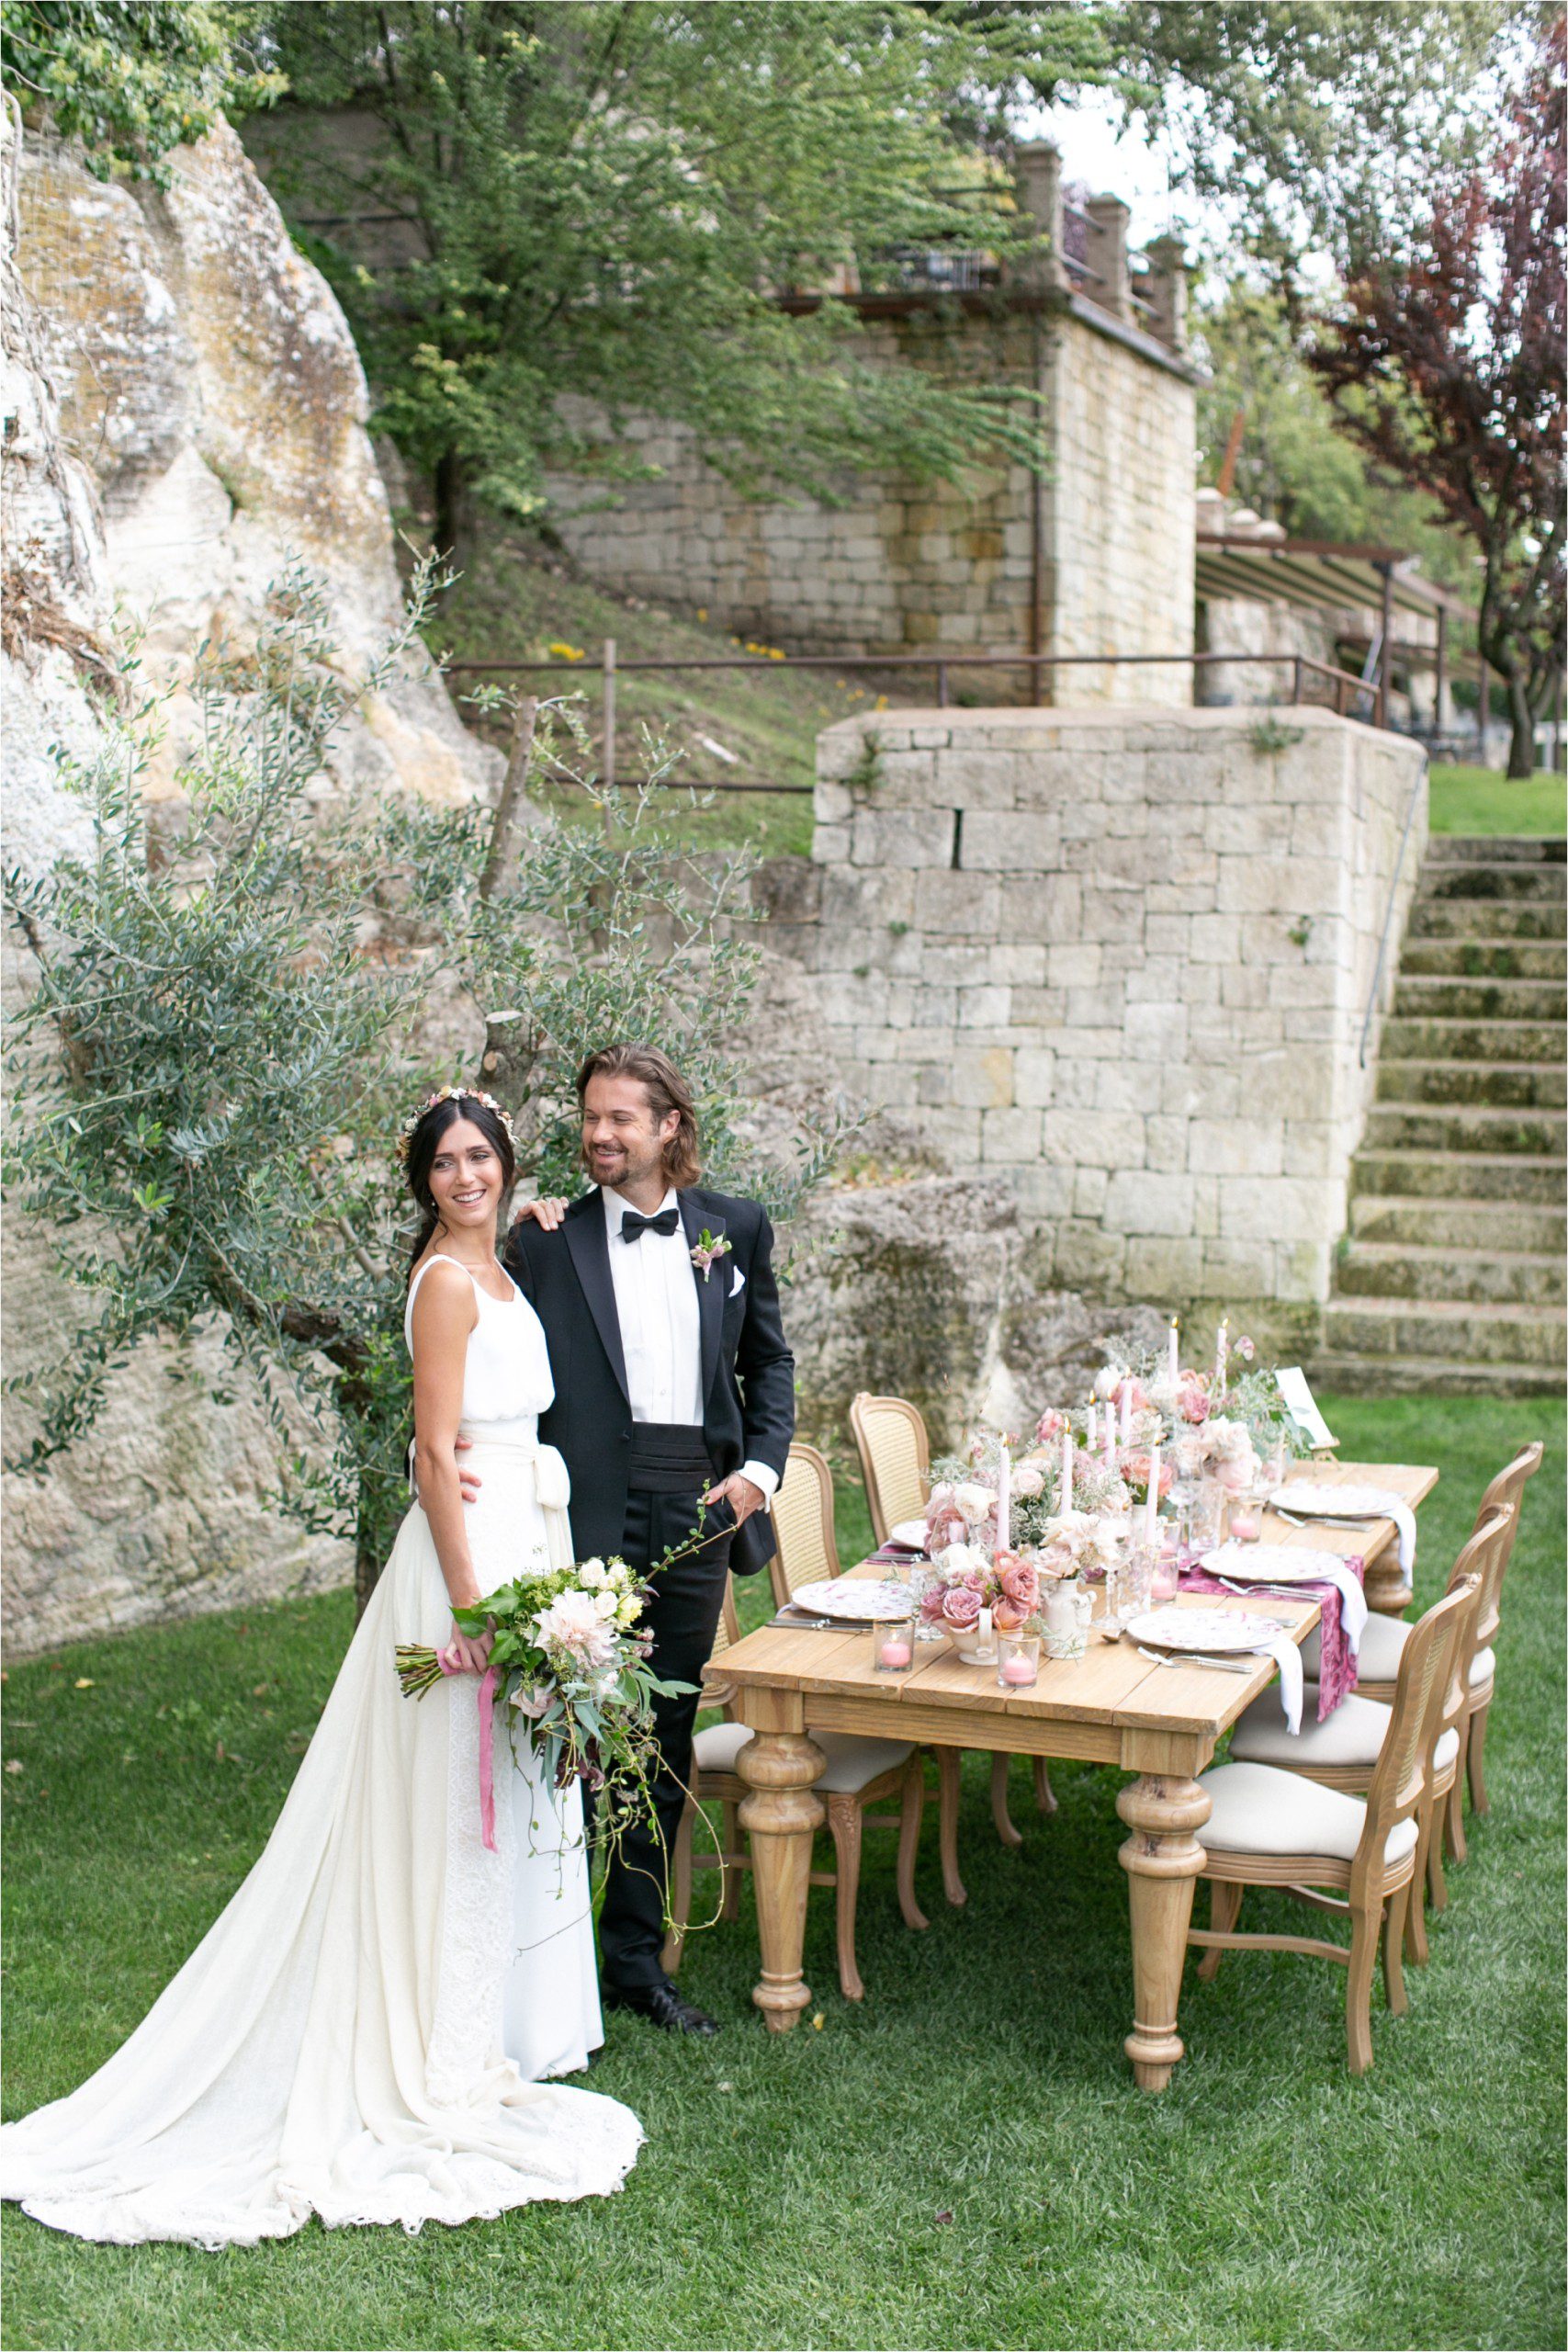 Stylish black-tie wedding in Tuscany